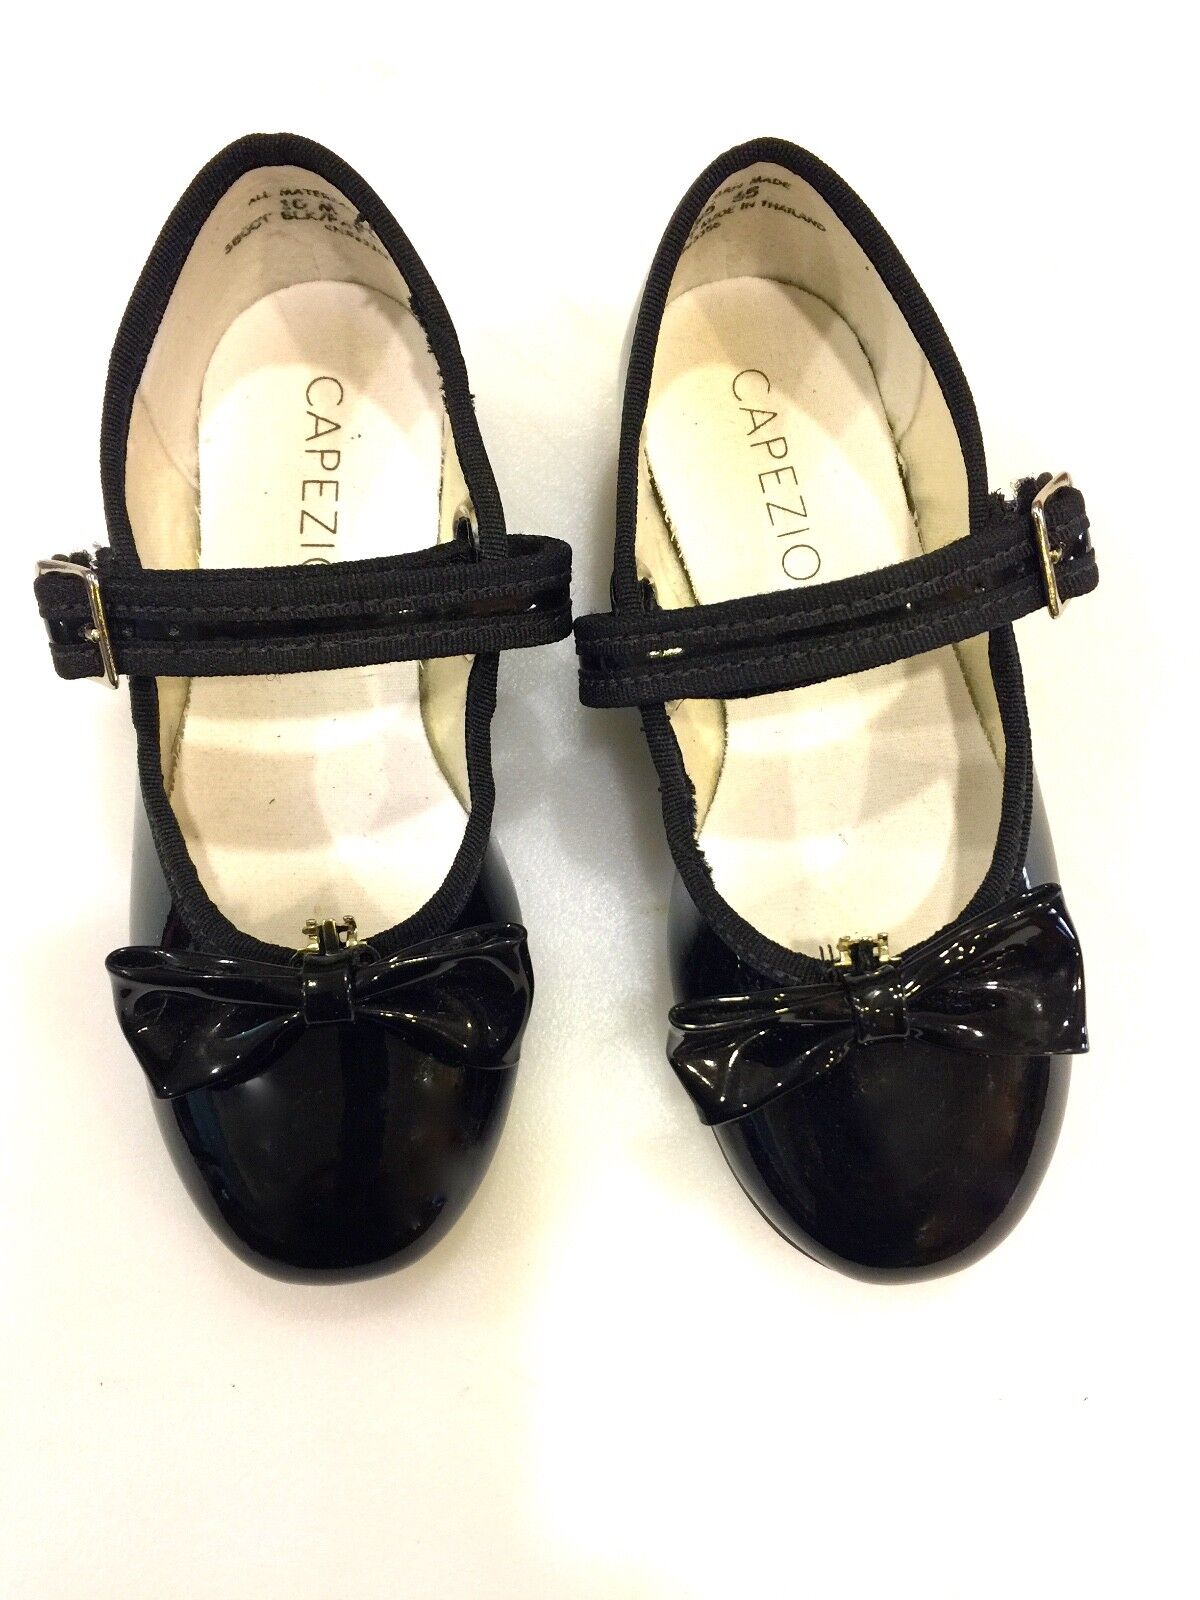 Capezio "mary Jane" Buckle Strap Tap Shoes Black W/ Bow Teletone Children's 10